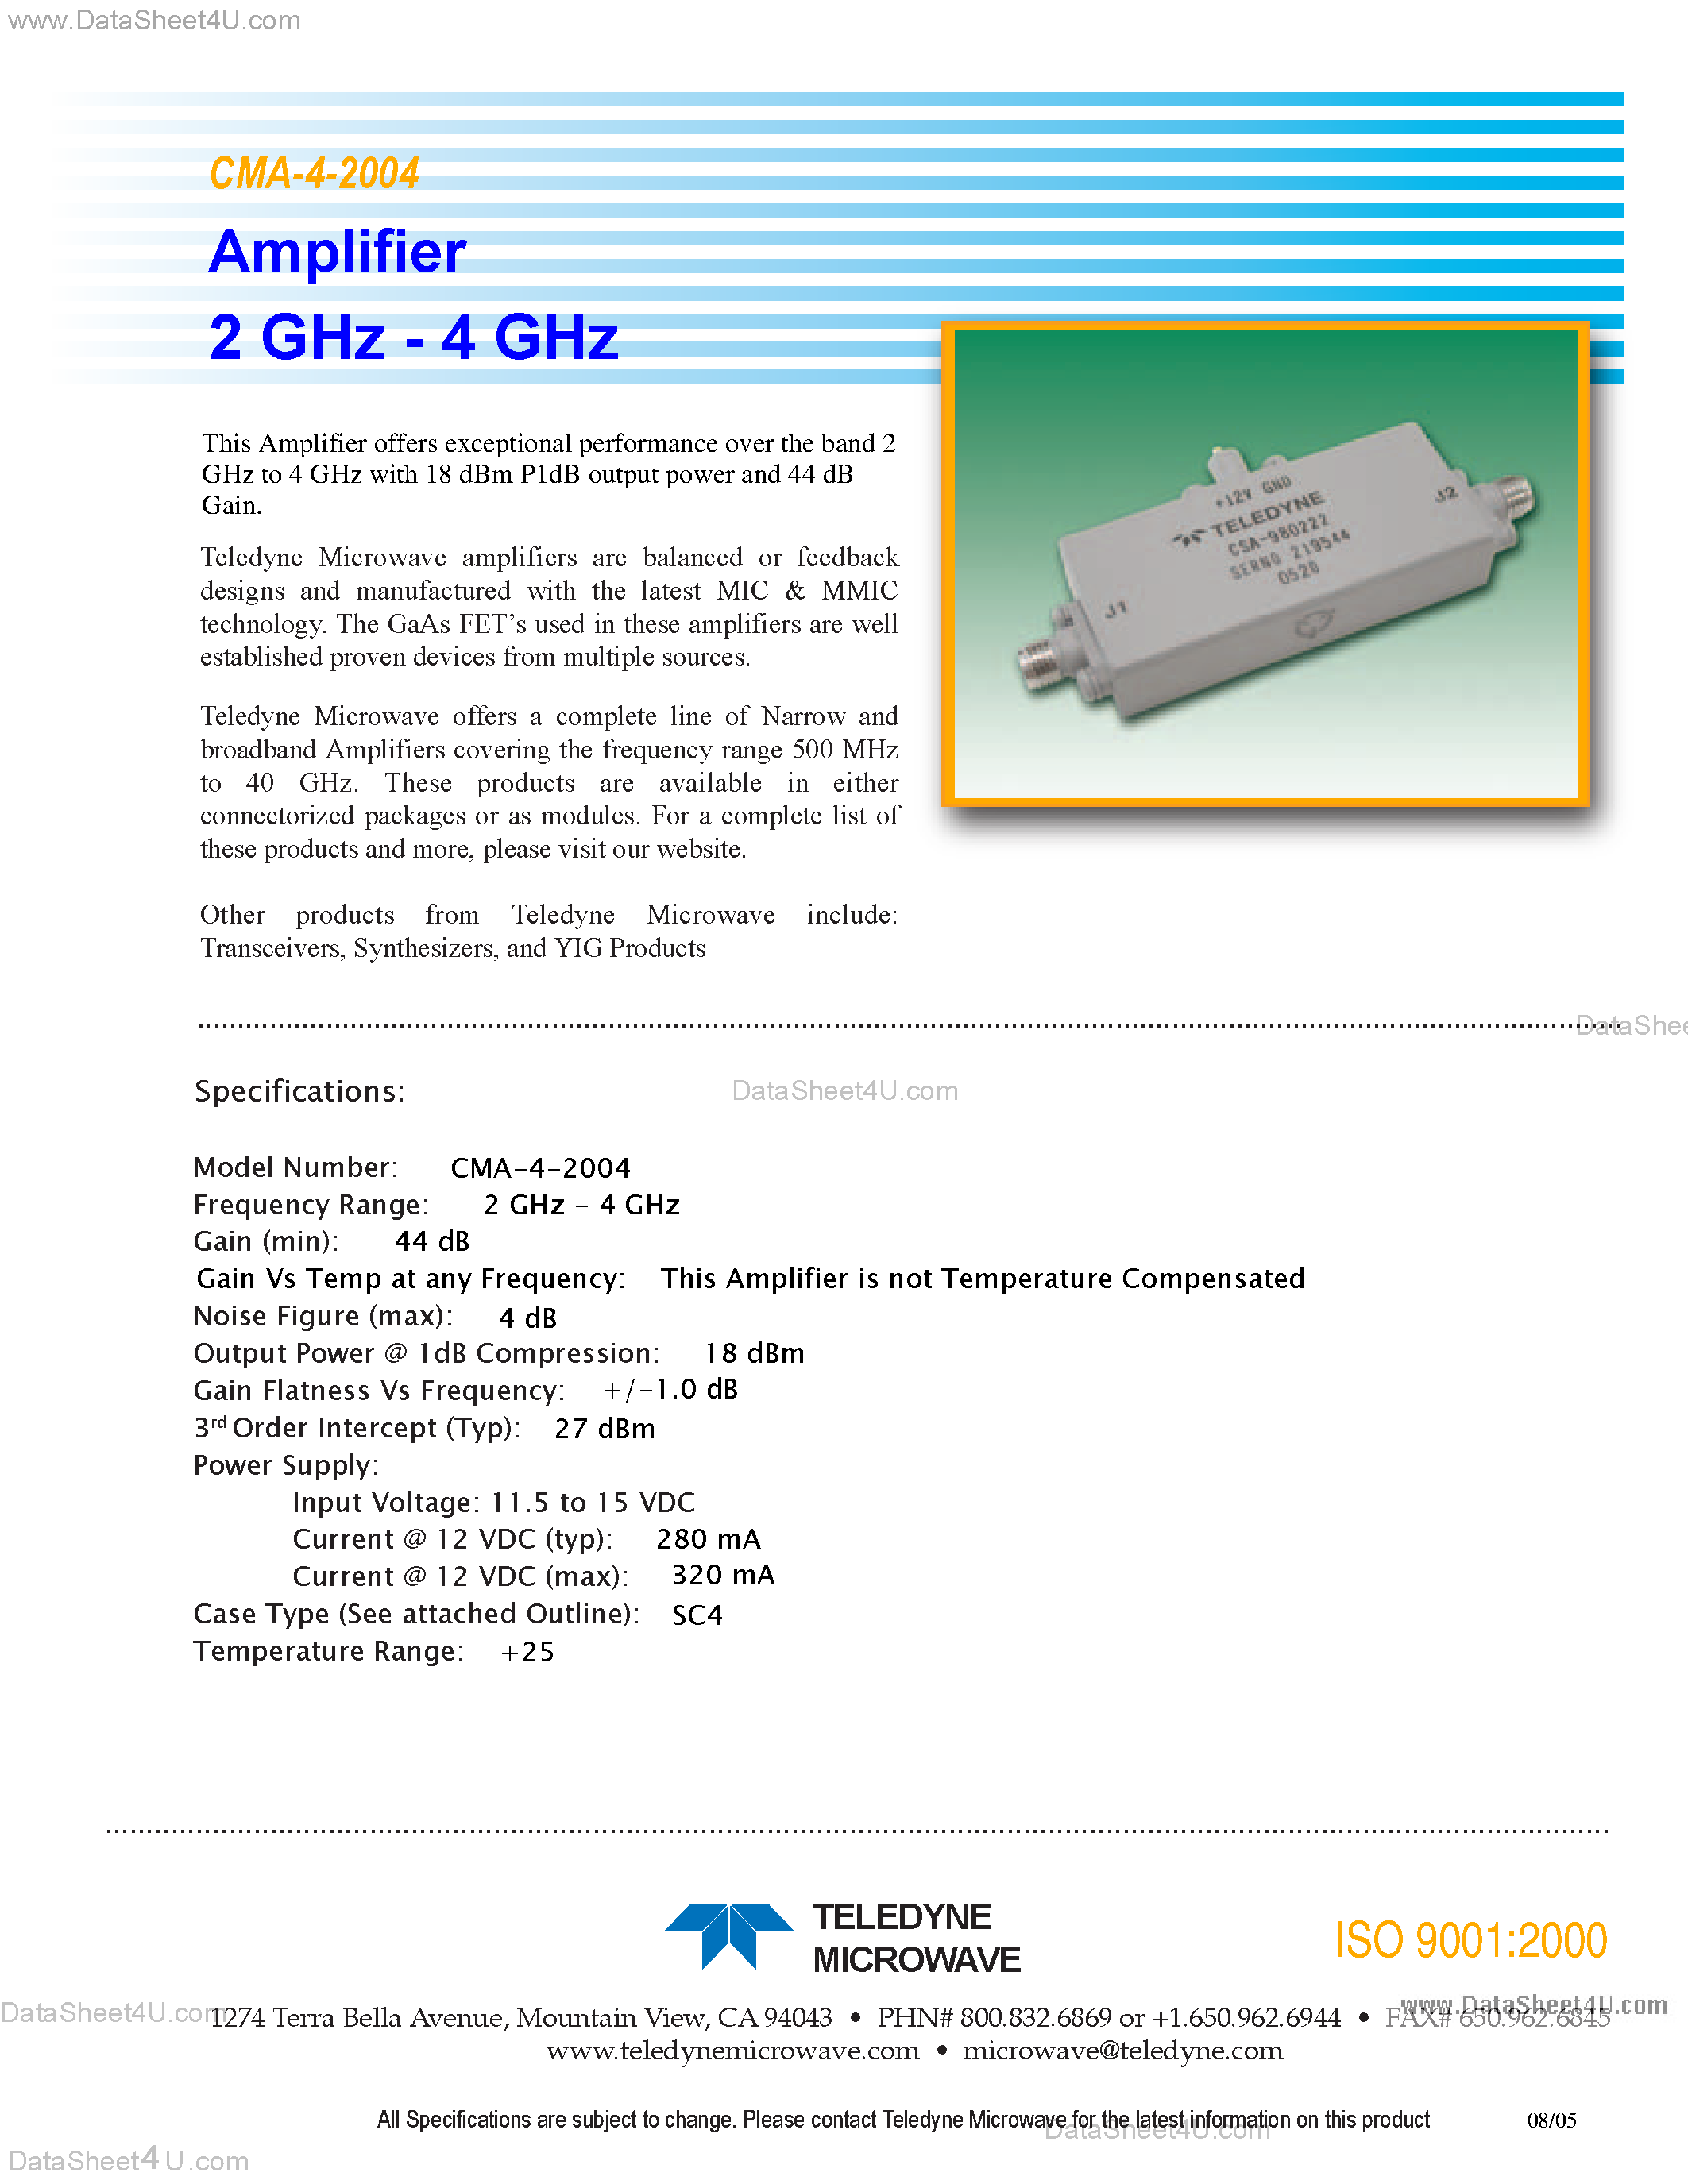 Datasheet CMA-4-2004 - Amplifier 2 GHz - 4 GHz page 1